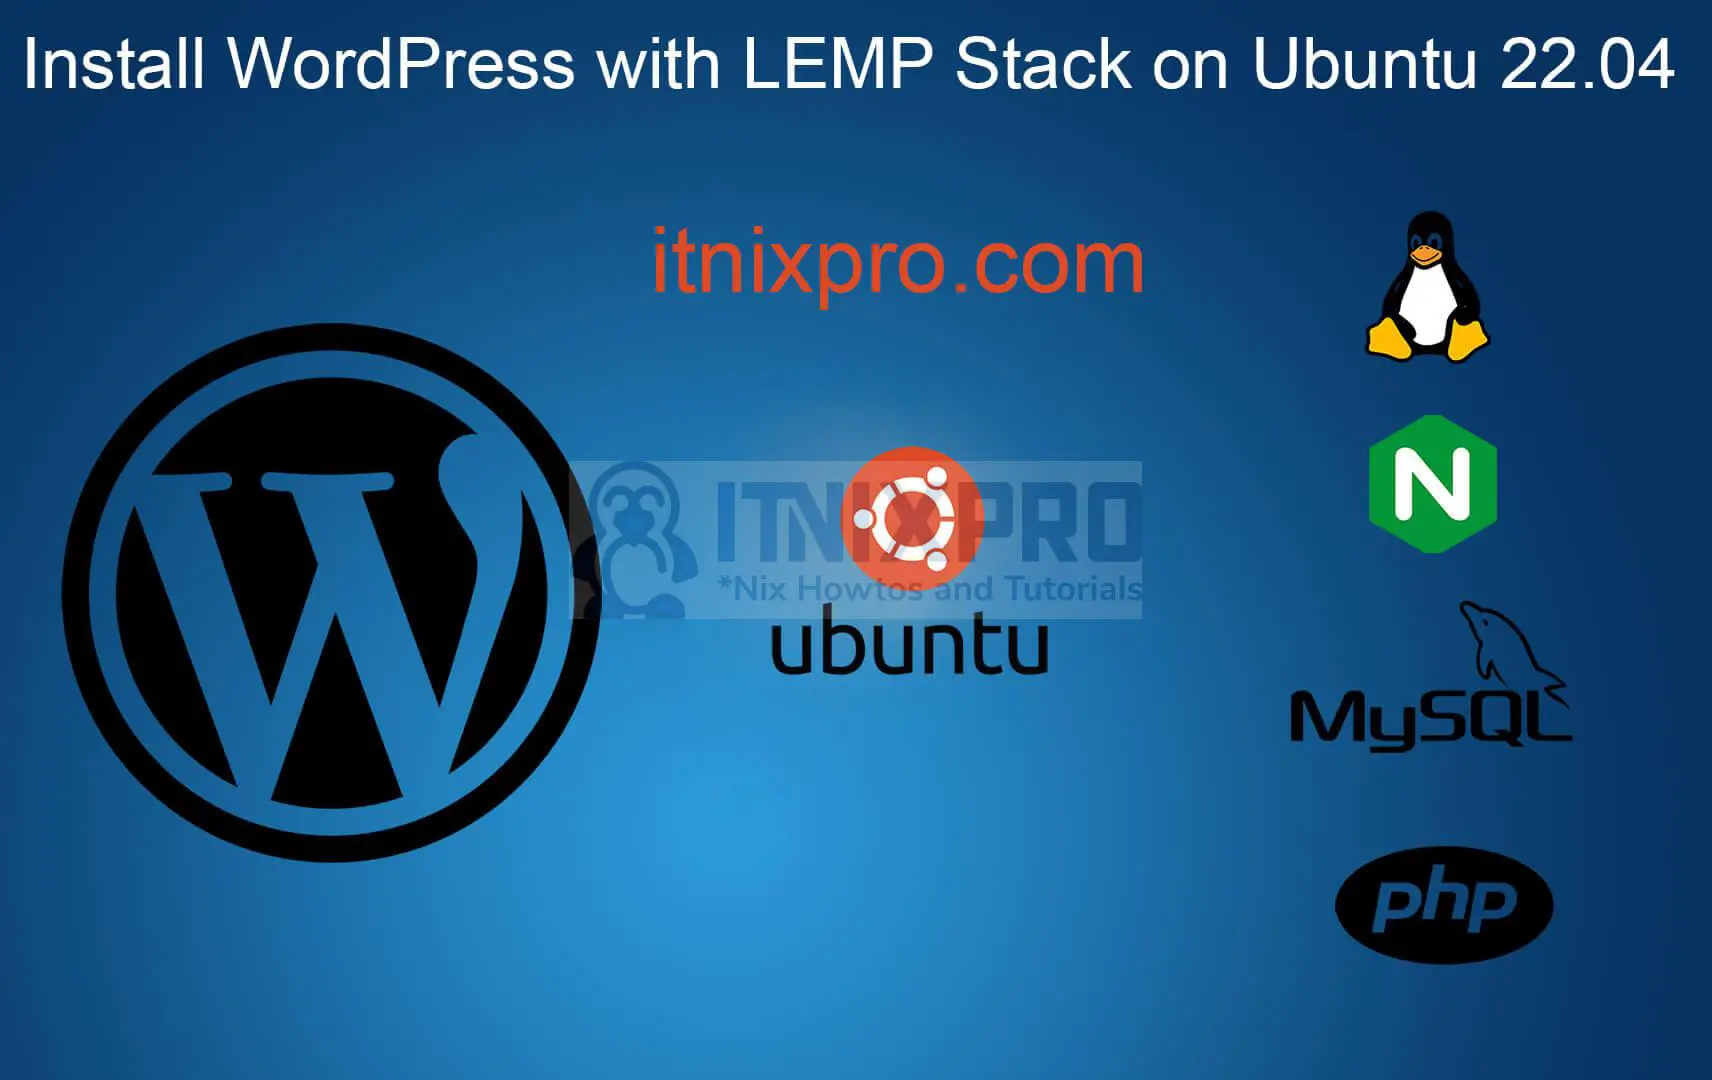 Install WordPress with LEMP Stack on Ubuntu 22.04